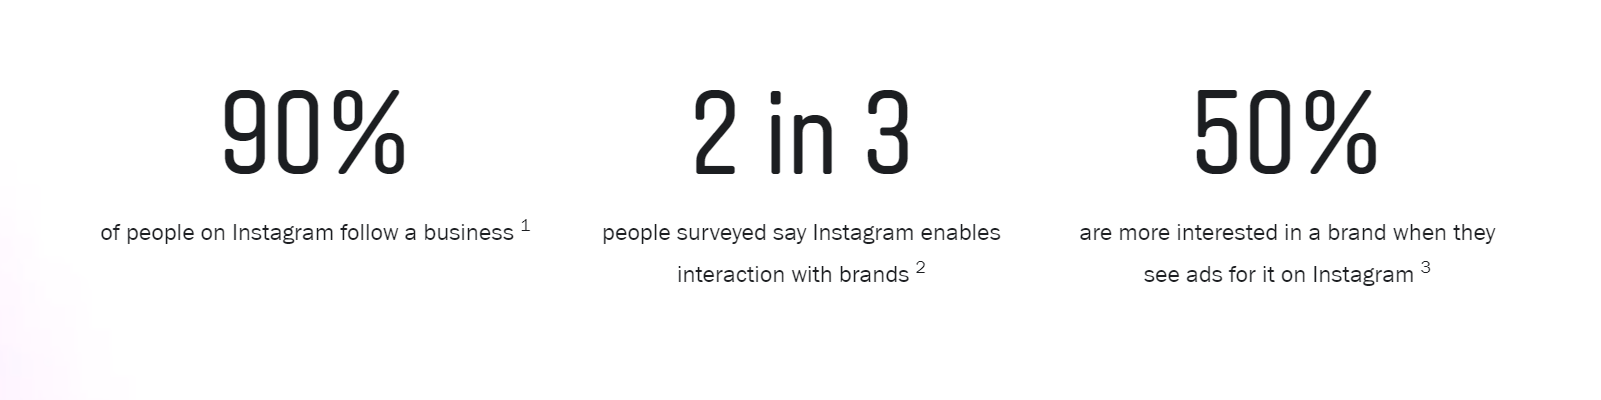 Instagram社交媒体营销统计